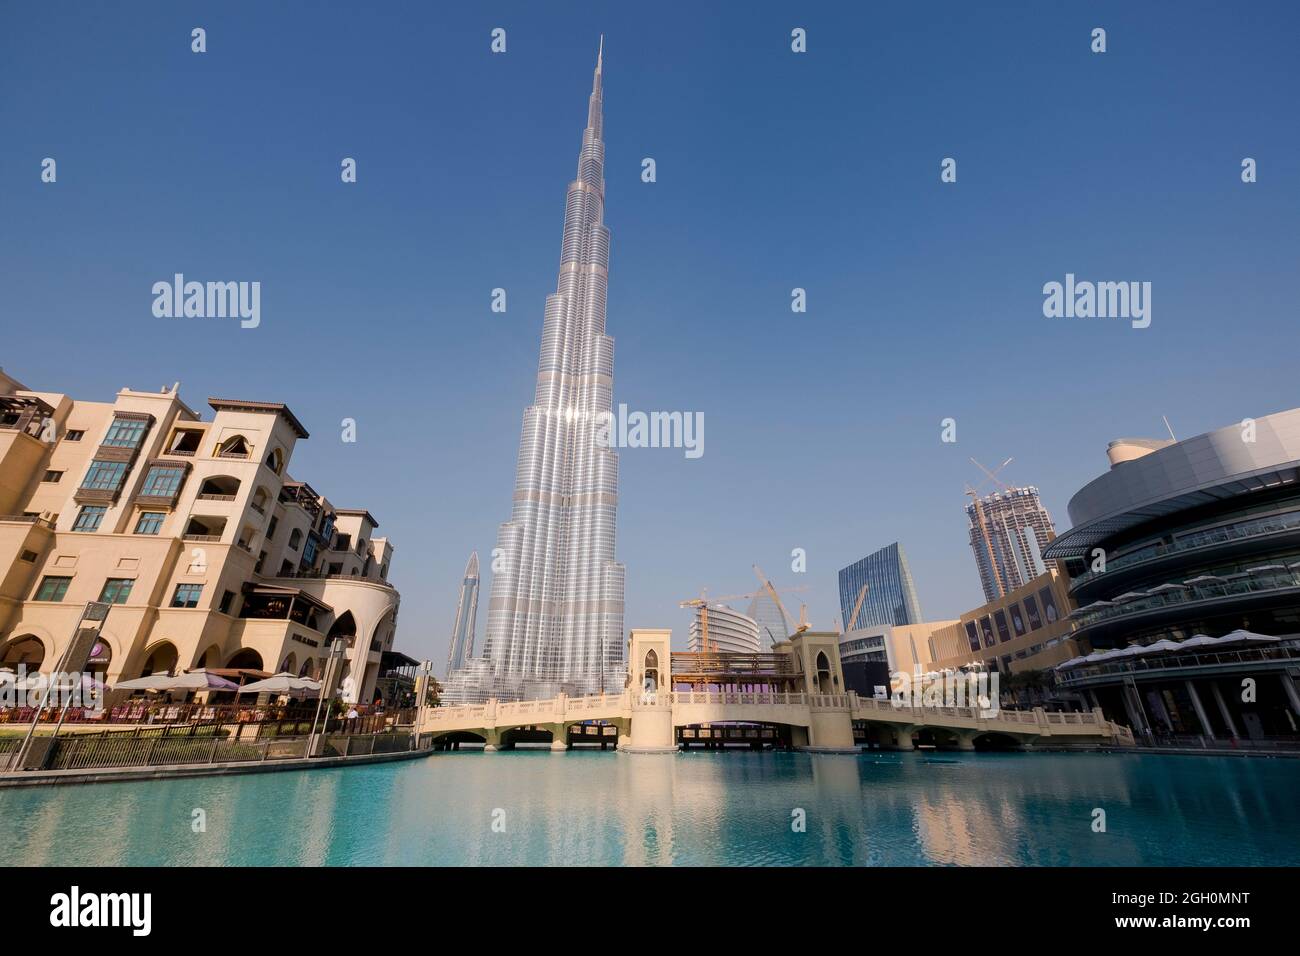 The skyscraper Burj Khalifa in the background of new mixed development, pedestrian bridge and lake. In Dubai, United Arab Emirates. Stock Photo